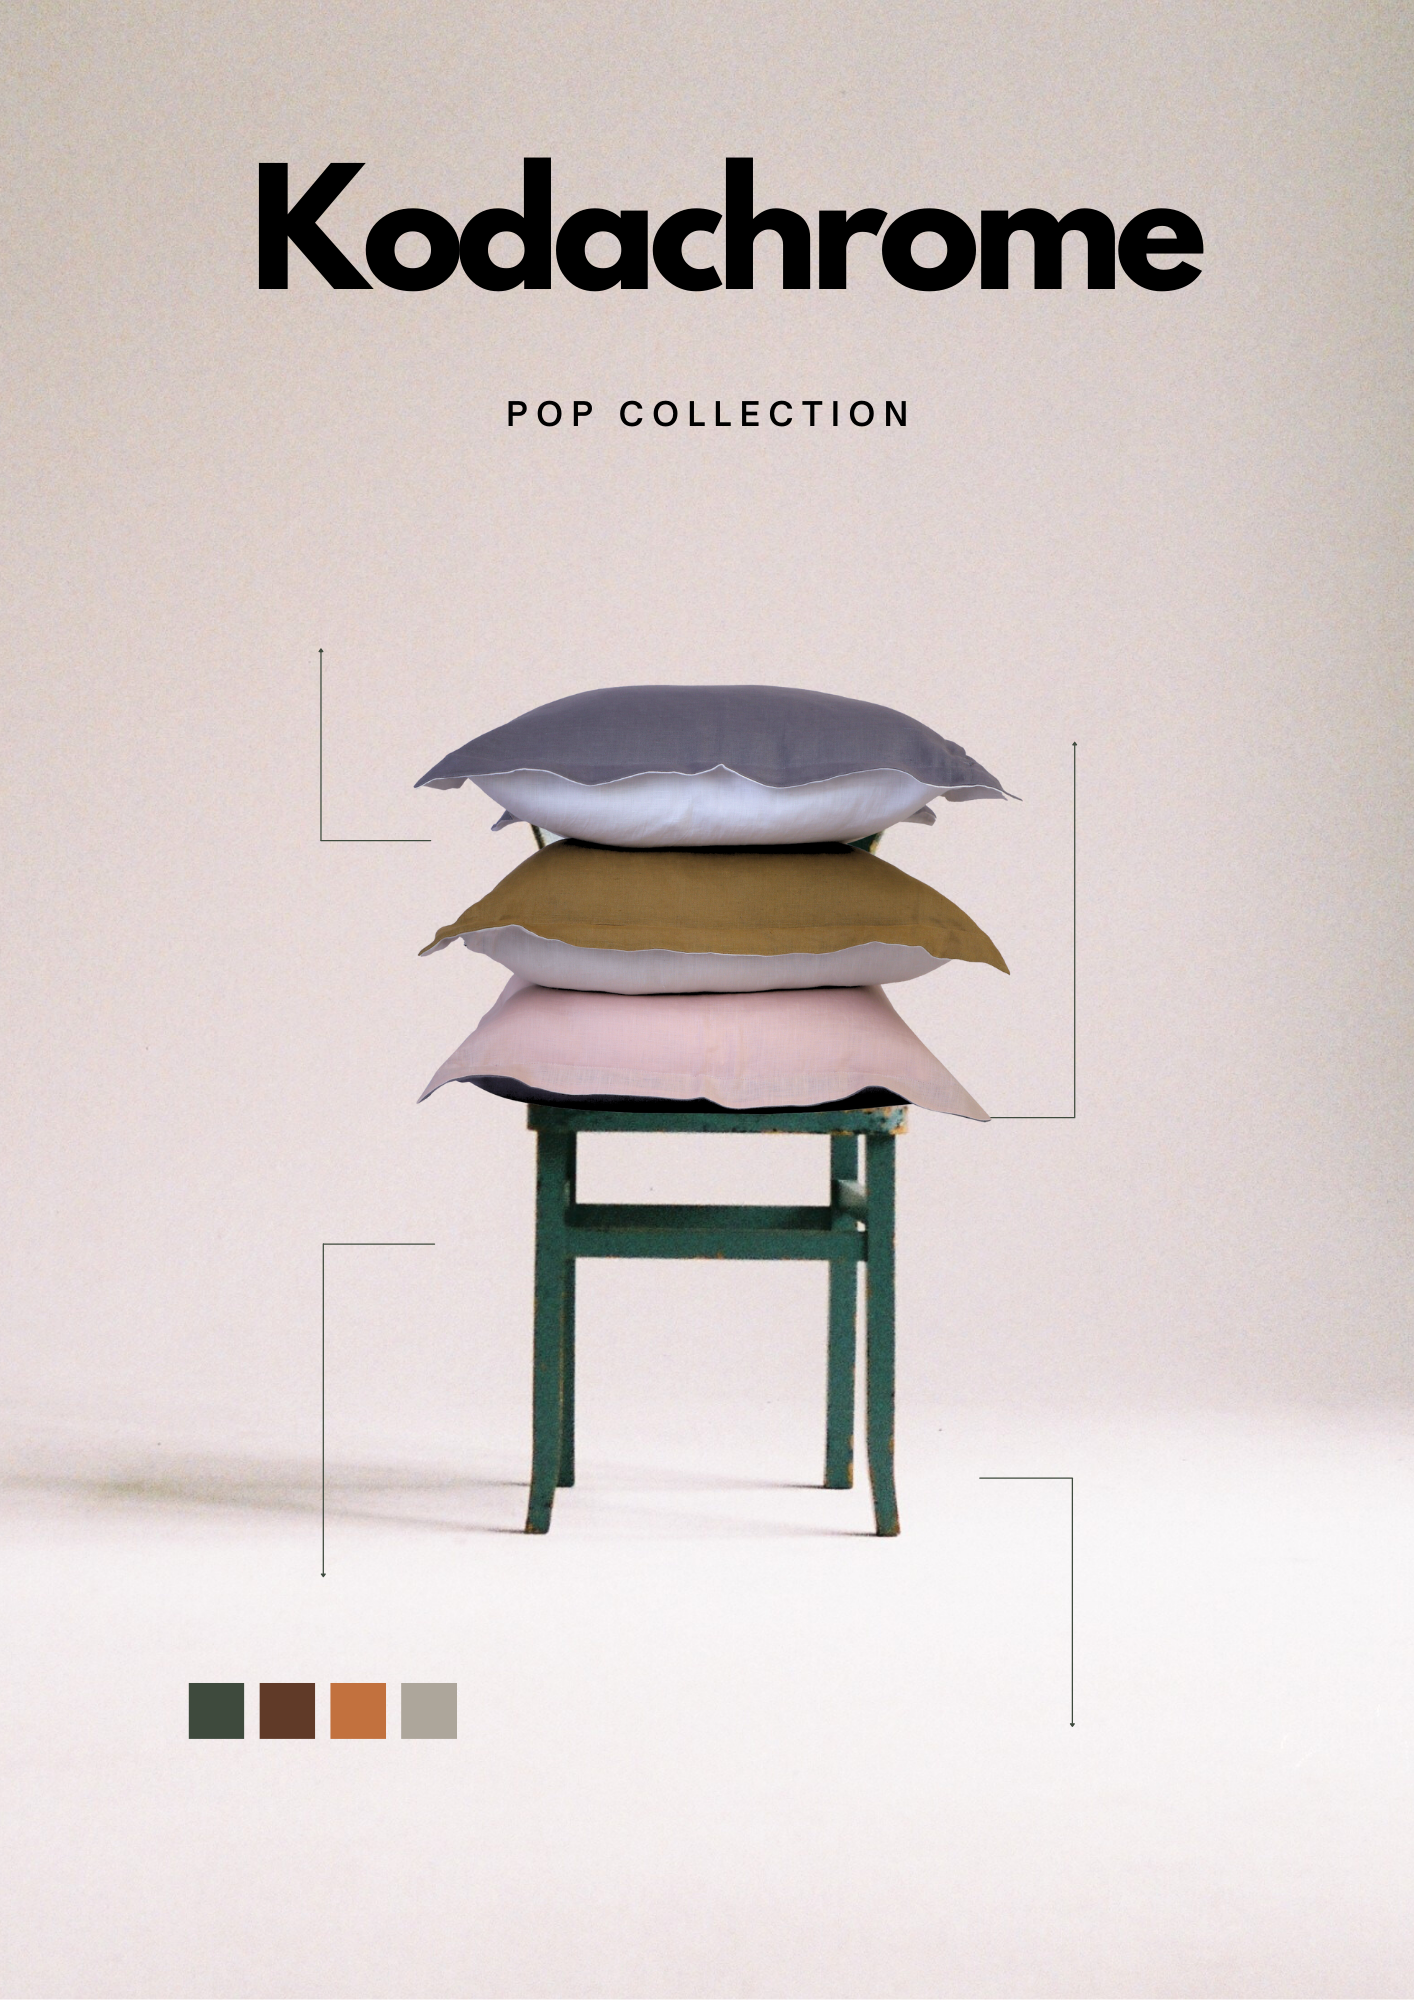 K Ø2 - Seamist + Lavender Linen Cushion Cover